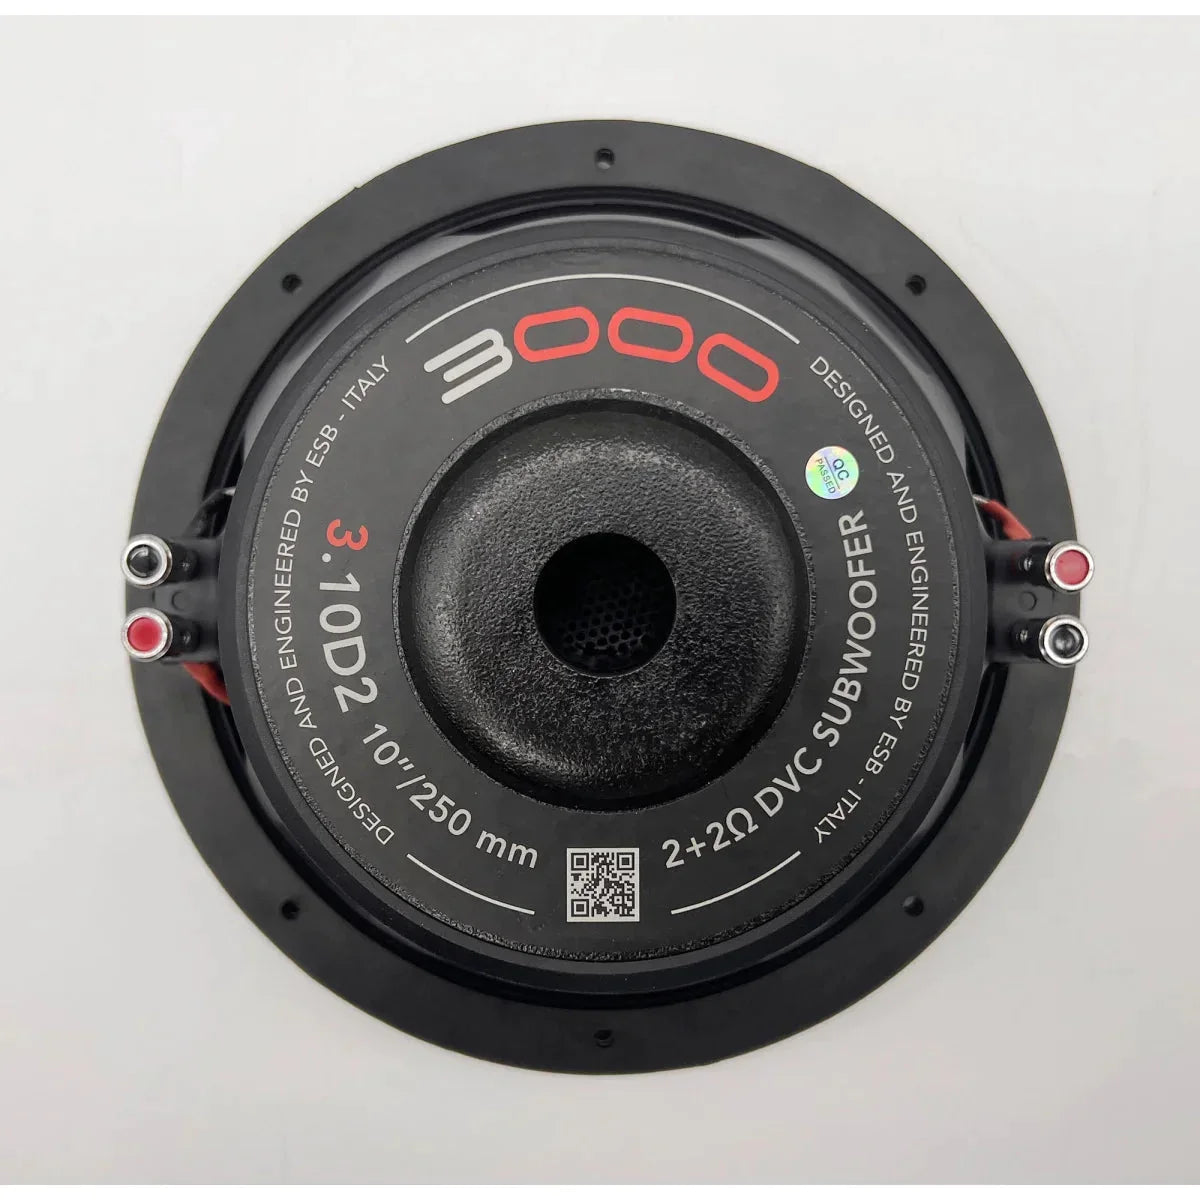 ESB Audio-3000 Series - 3.10 D2/D4-10" (25cm) Subwoofer-Masori.de